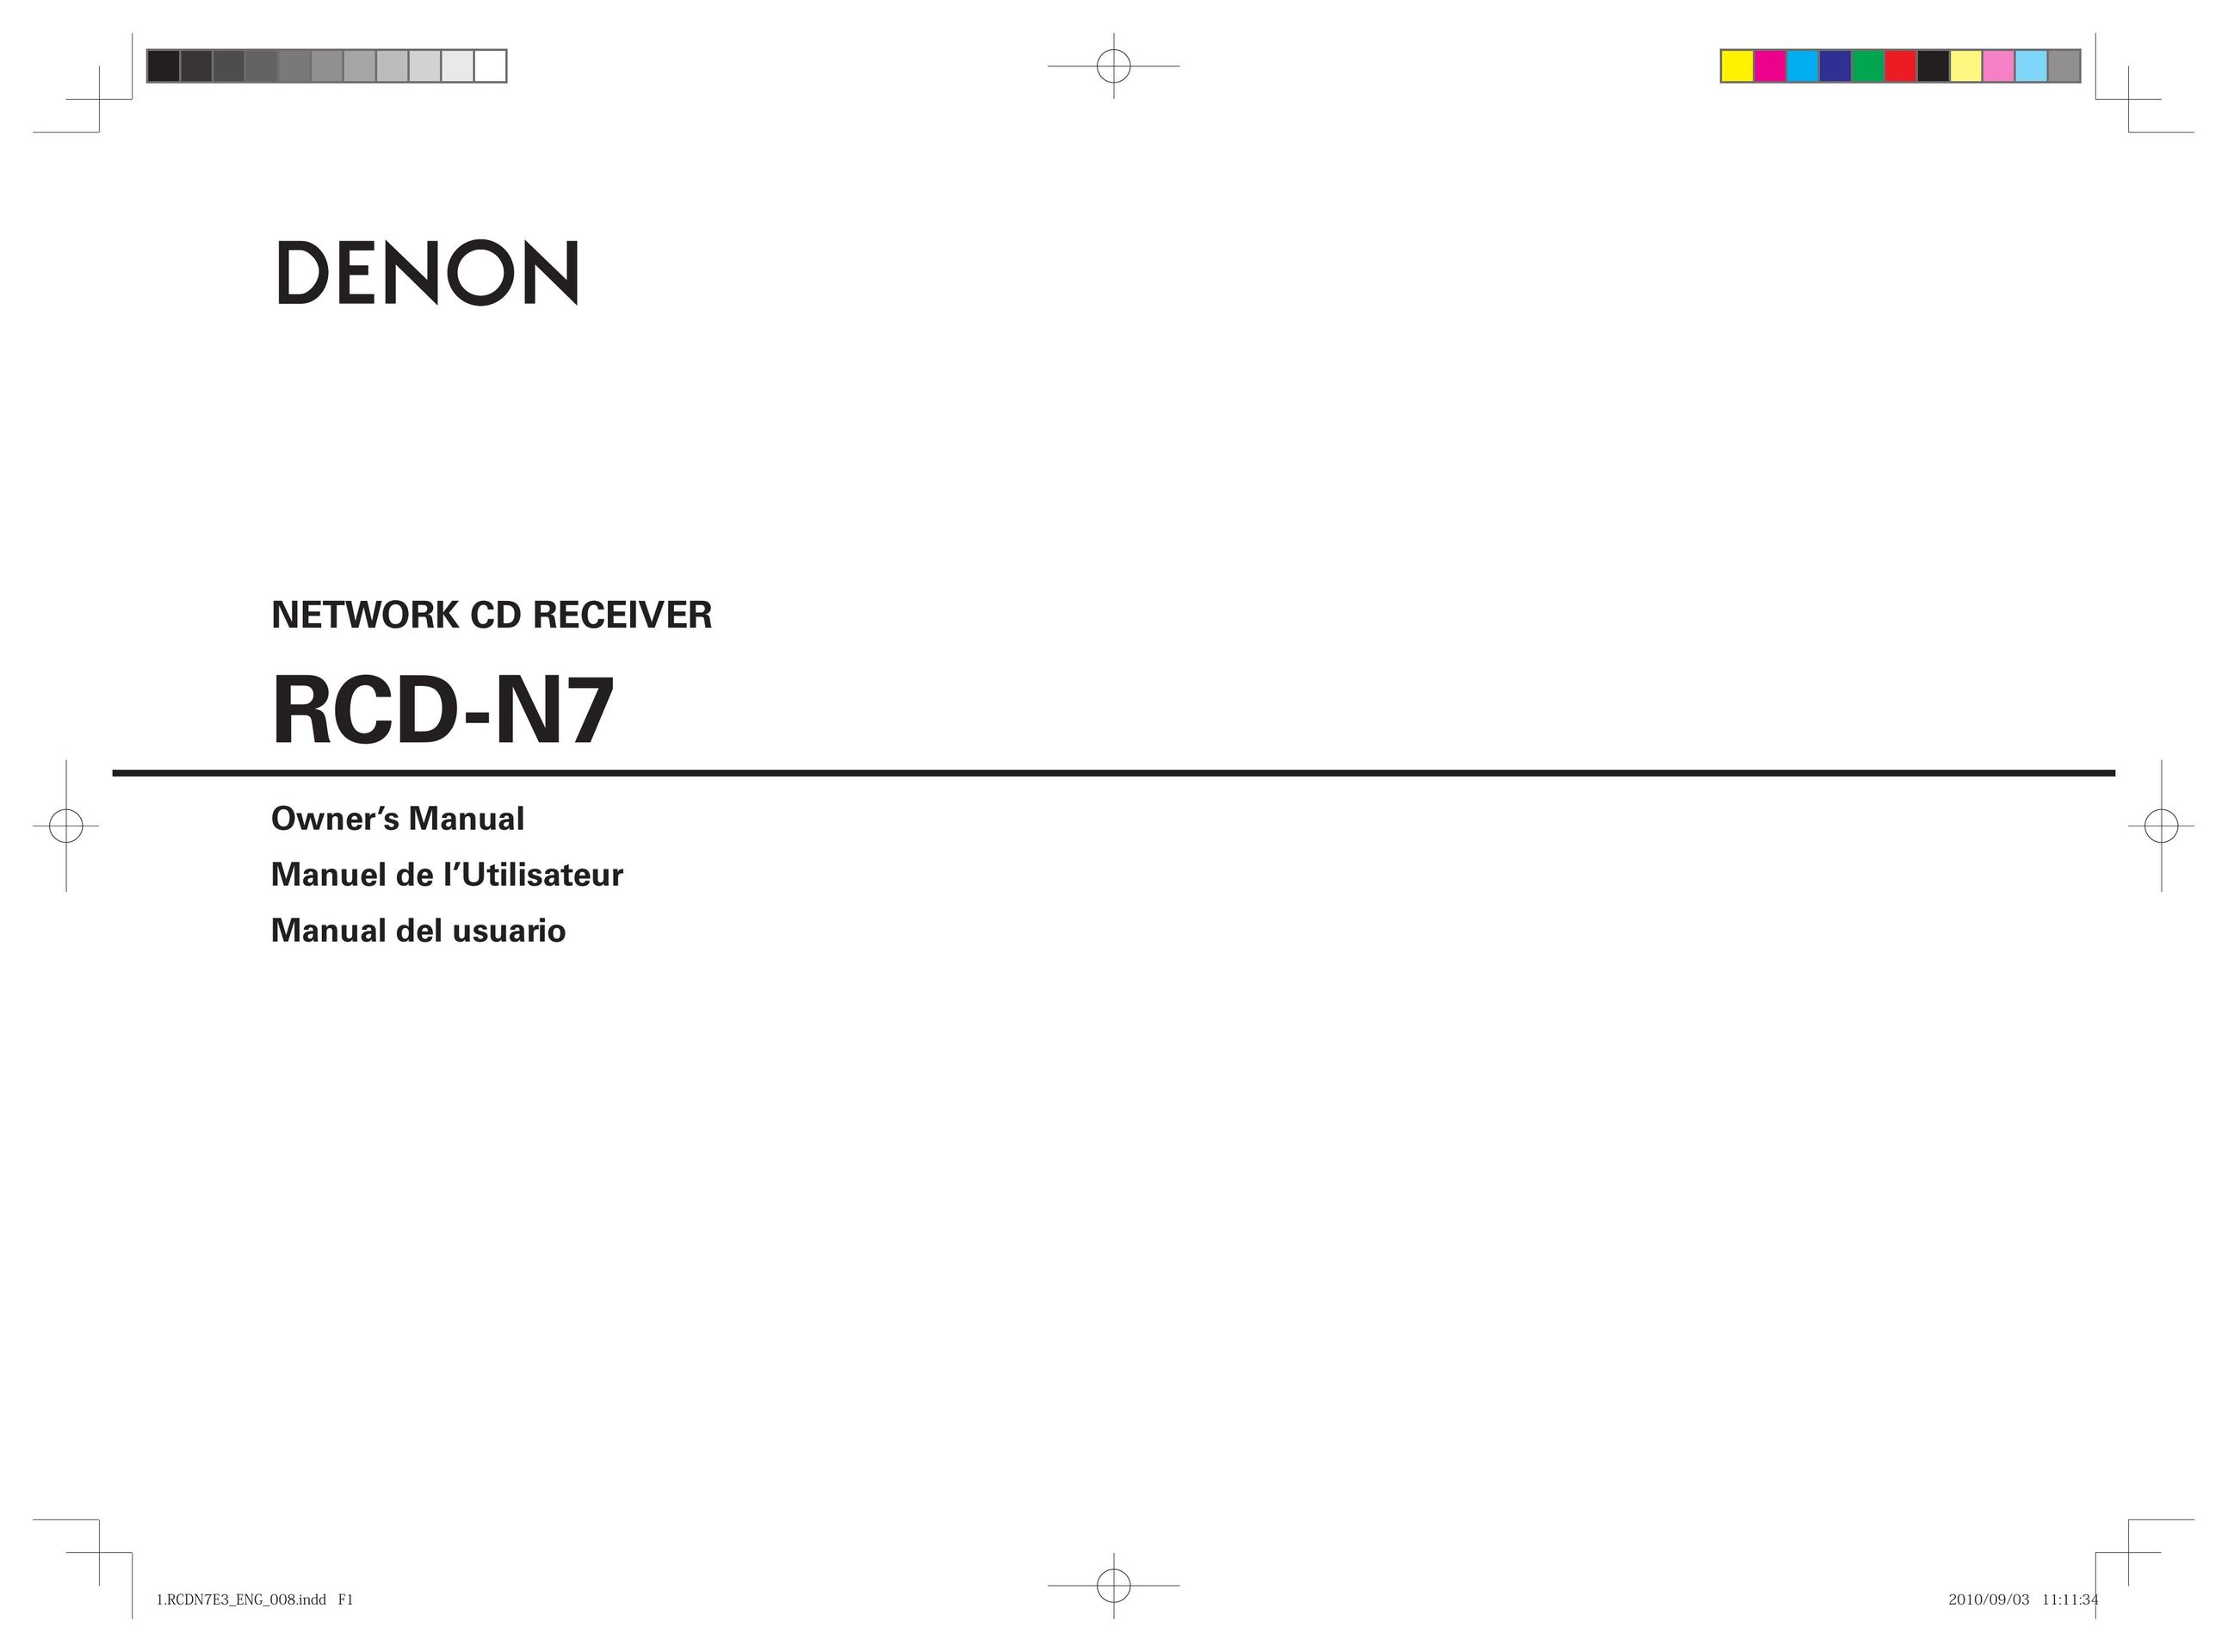 Denon RCD-N7 Car Stereo System User Manual